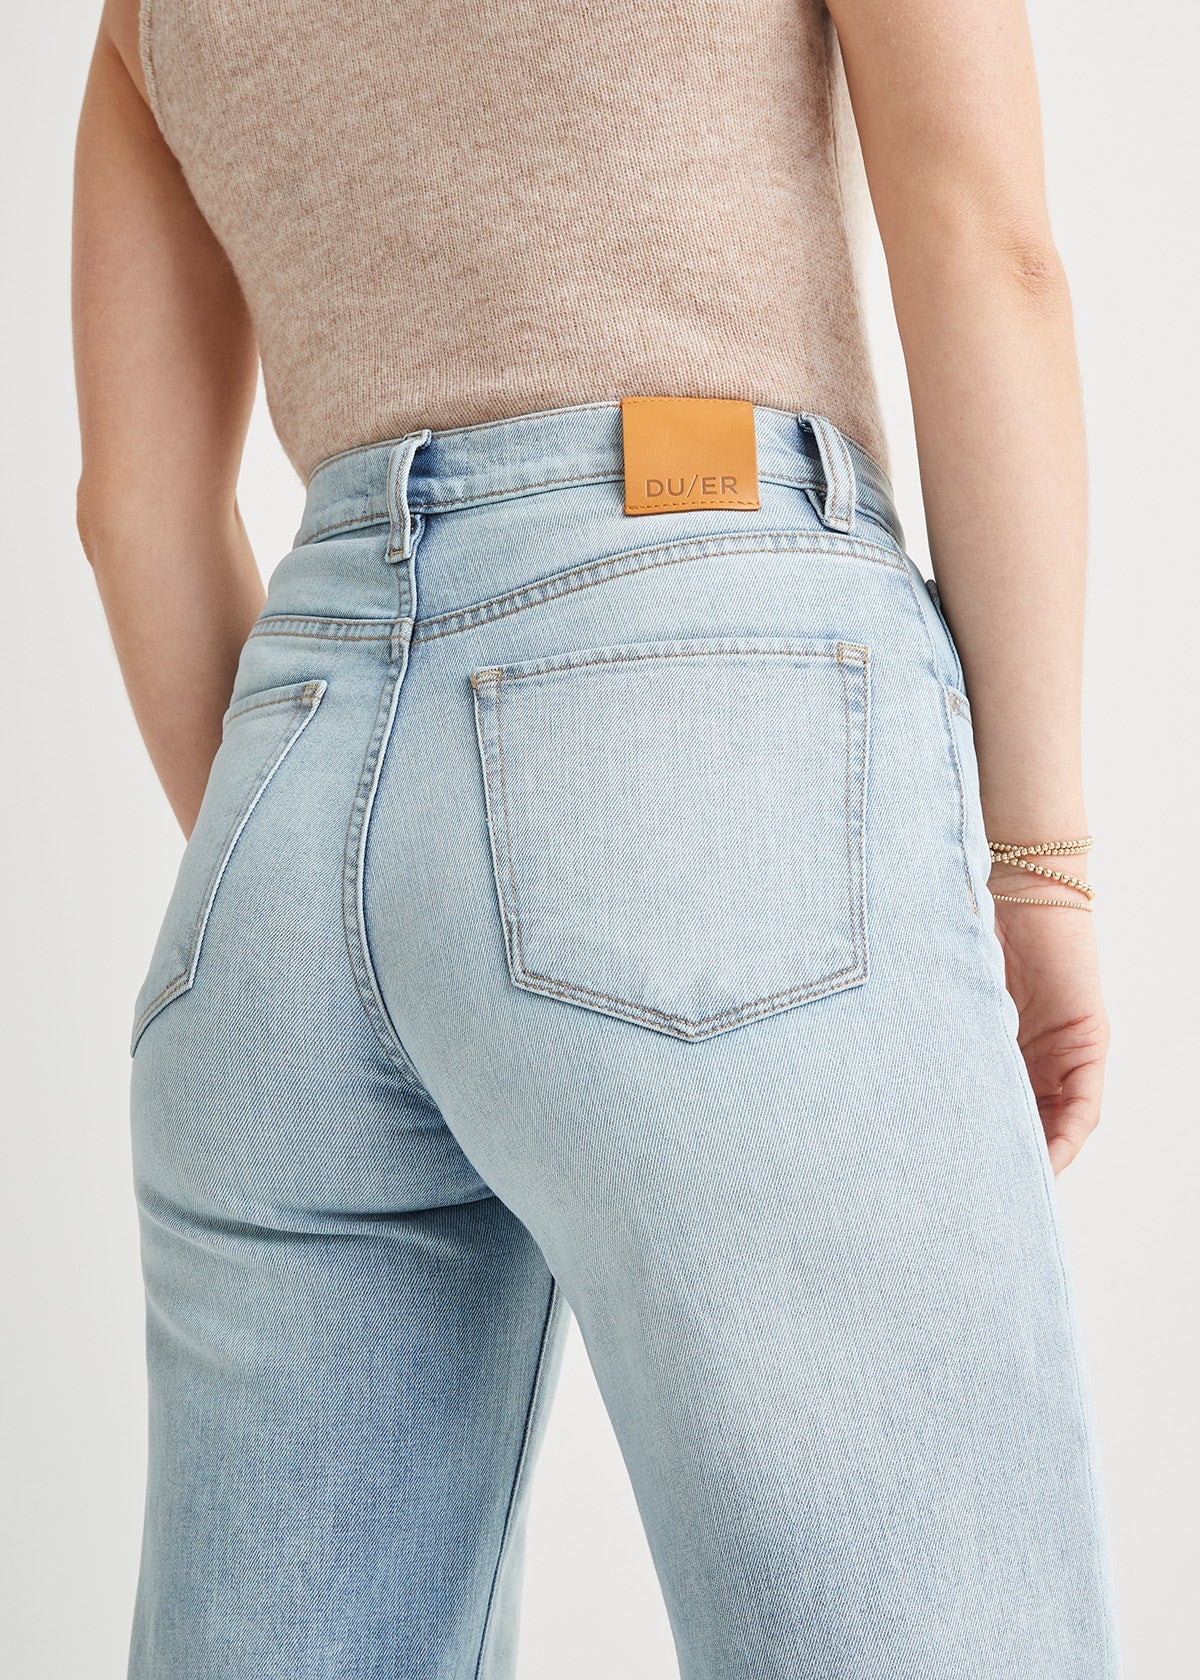 Buy Vetinee Wide Leg Capri Jeans for Women High Waisted Stretch